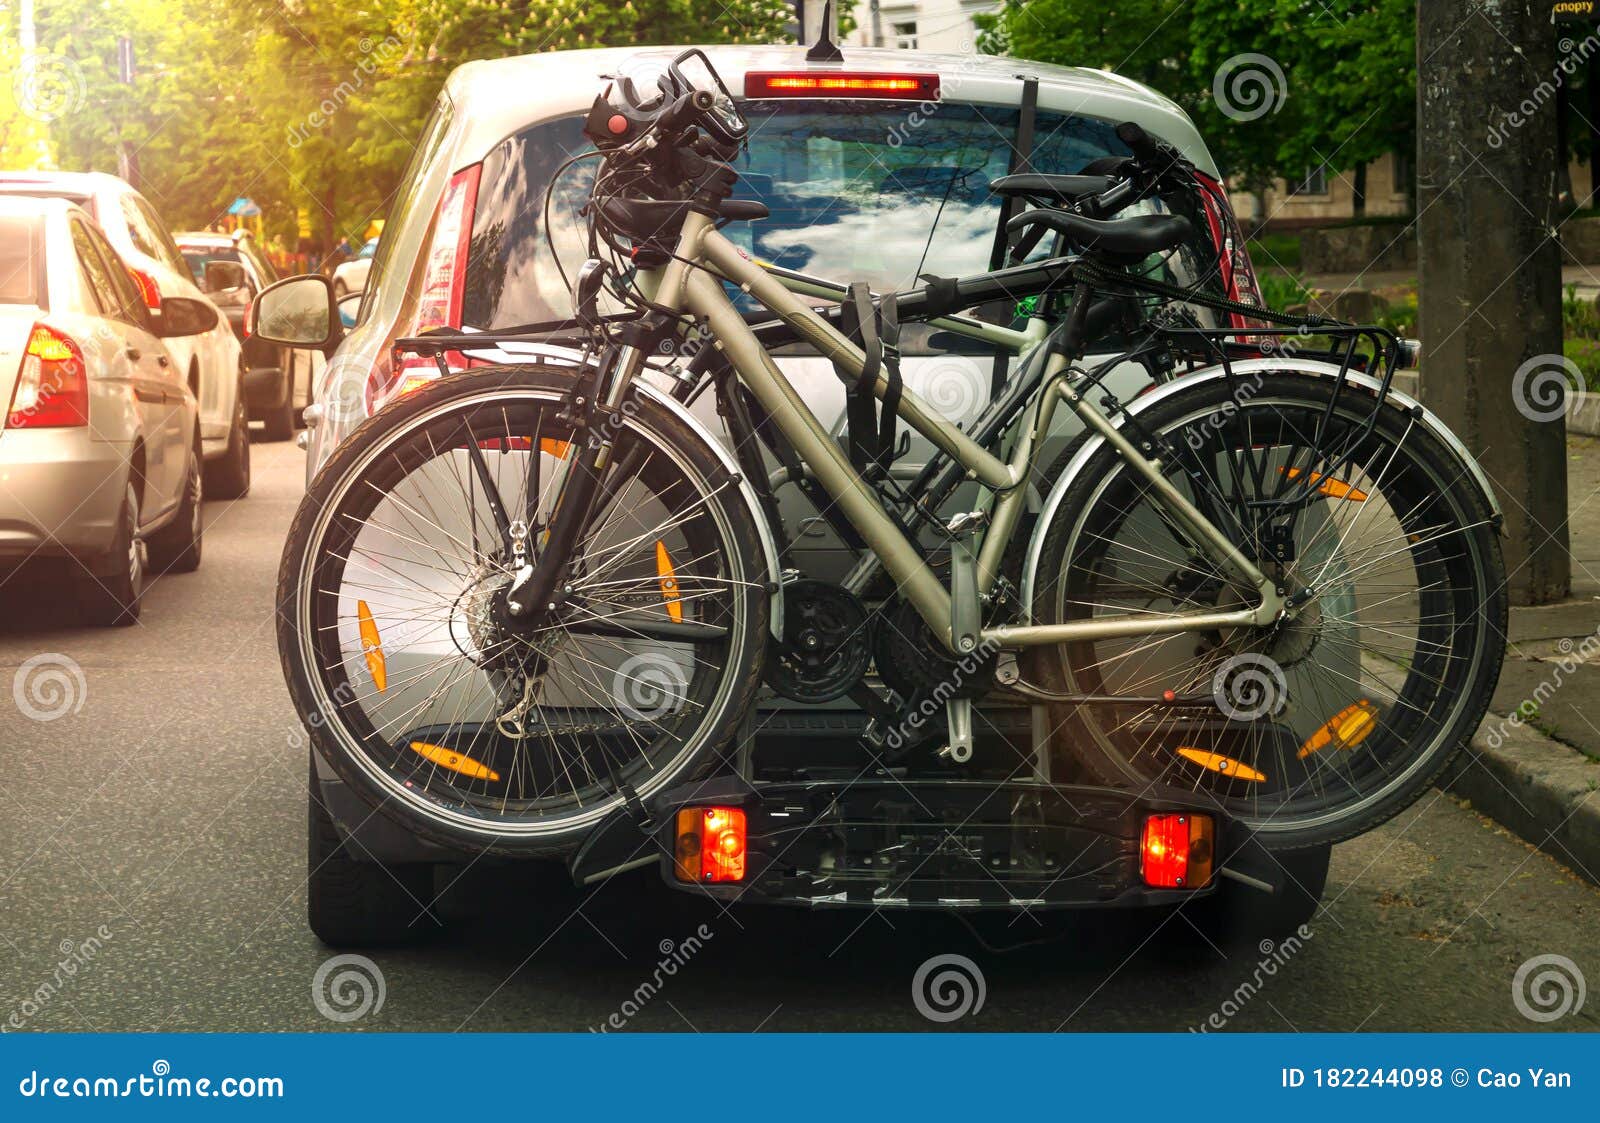 mountain bike carrier for car